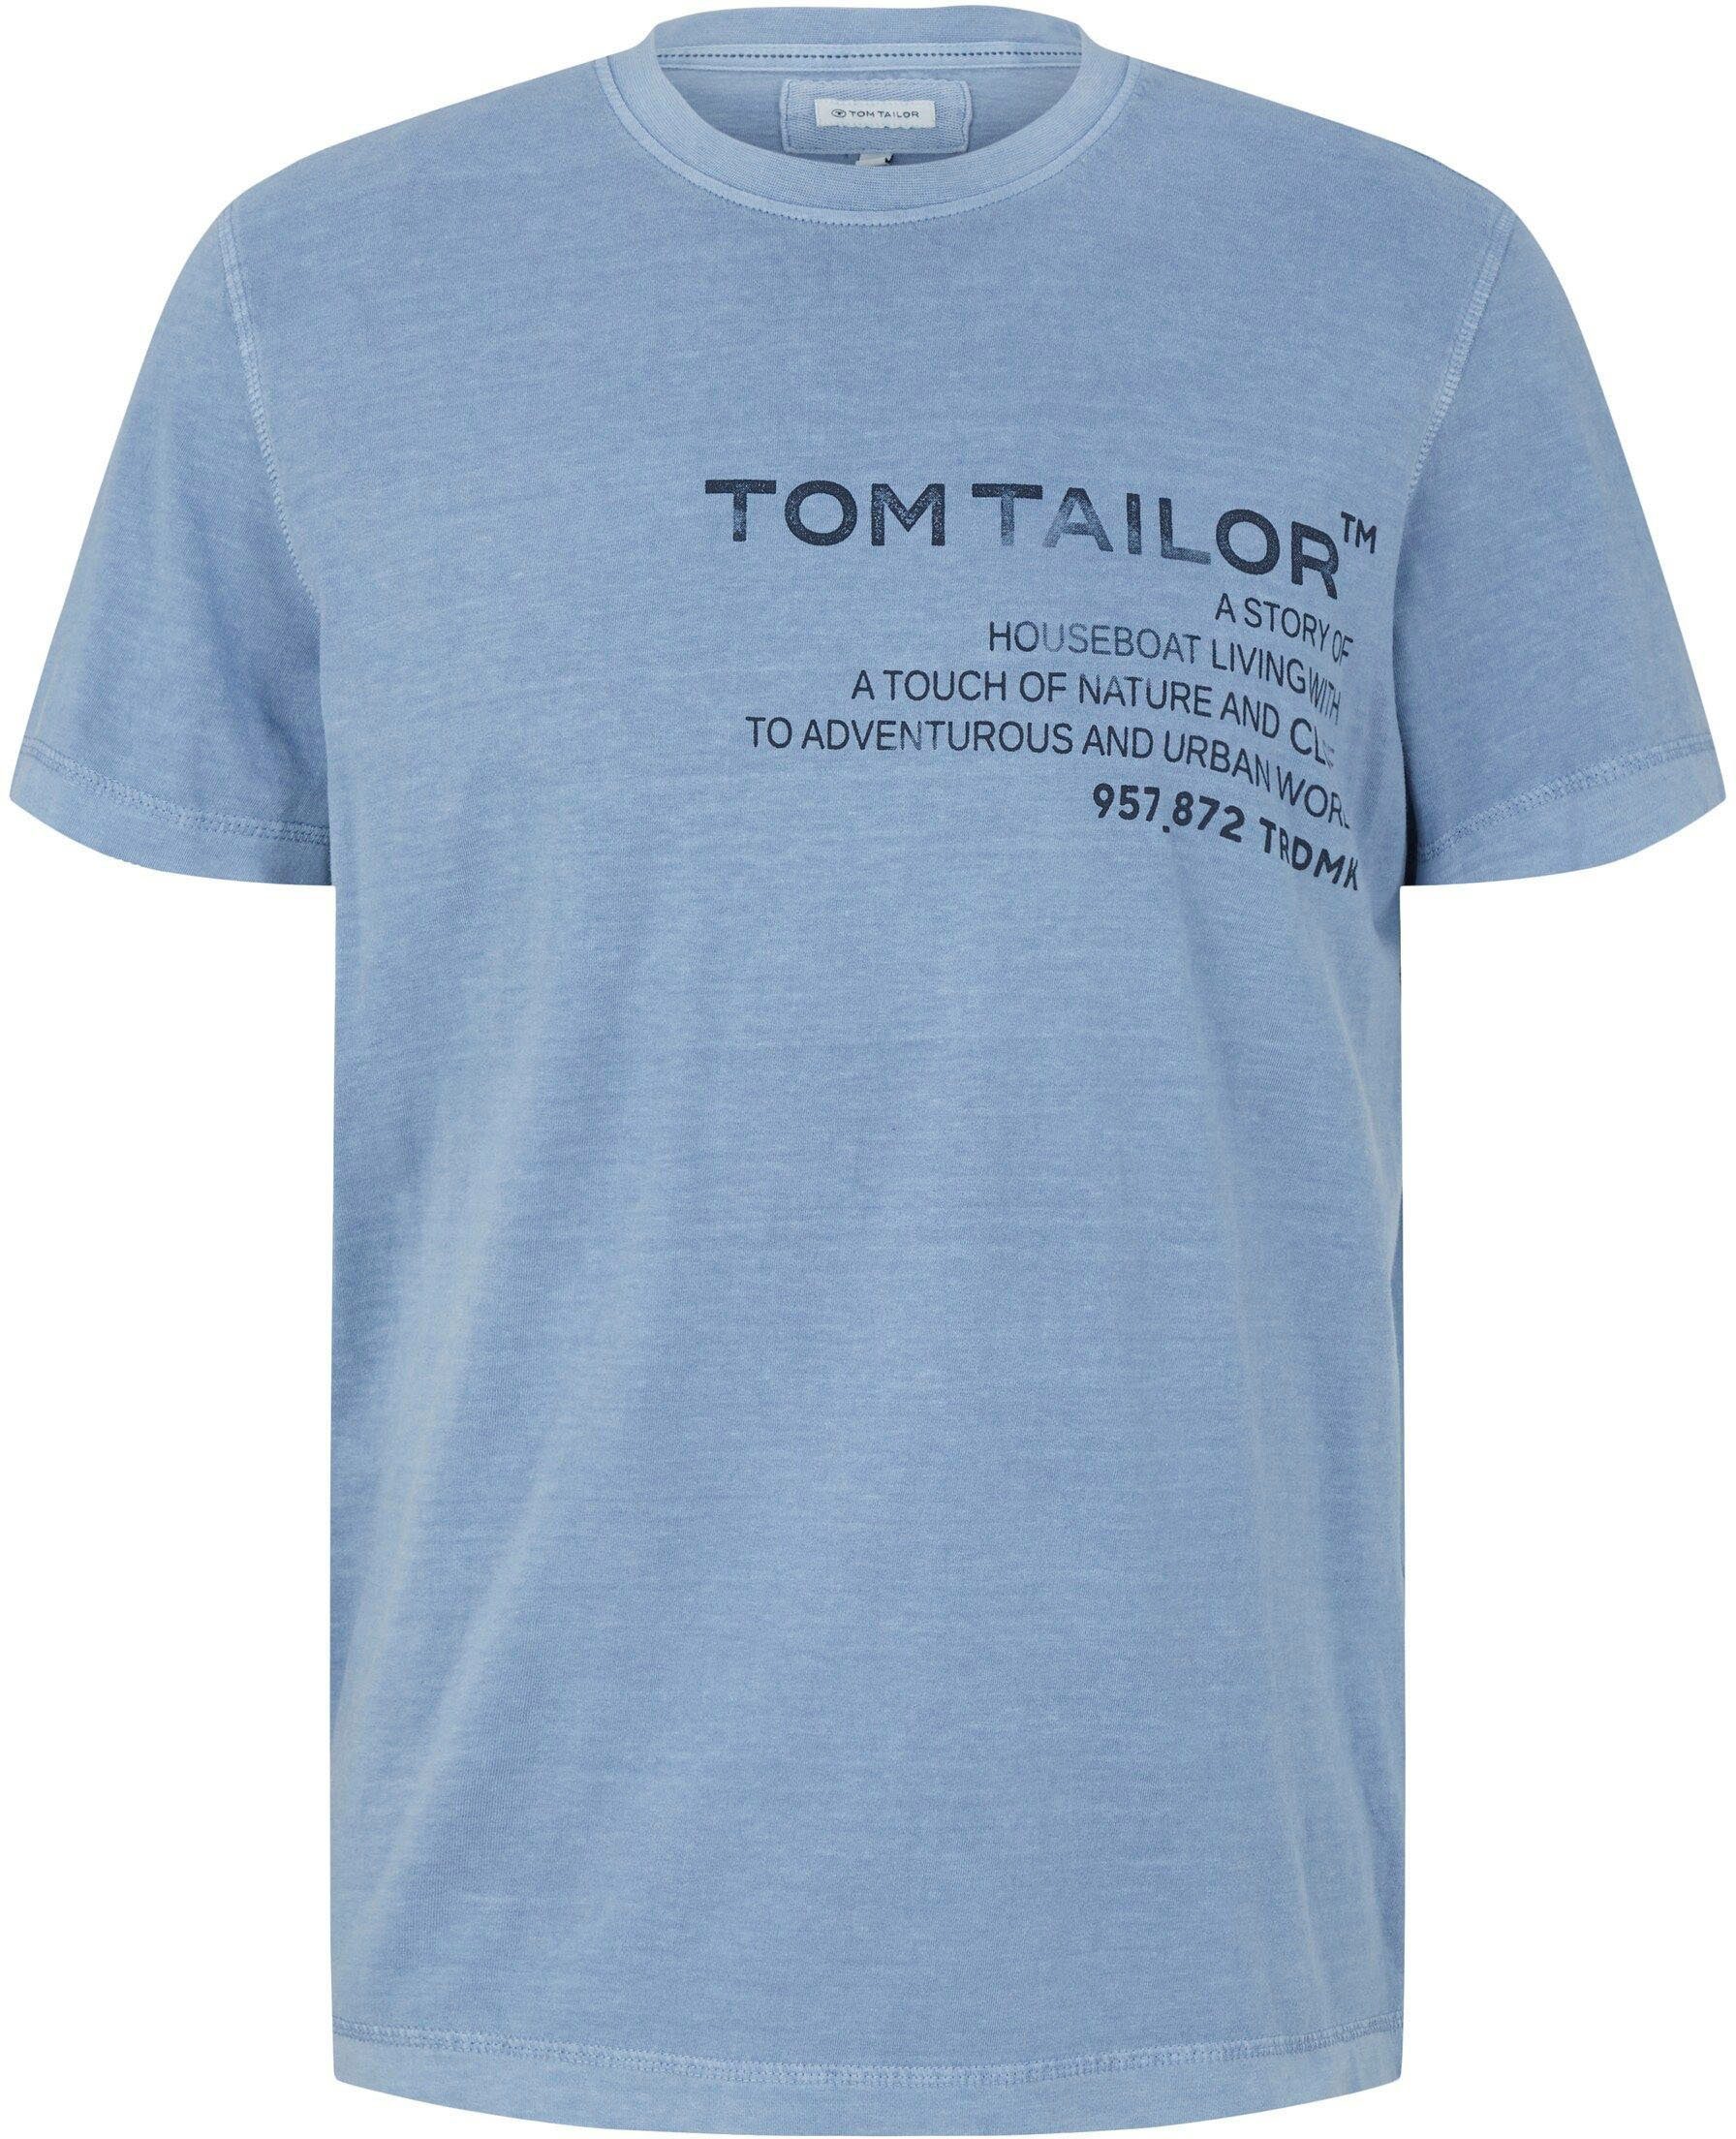 T-Shirt greyish TAILOR mid TOM blue